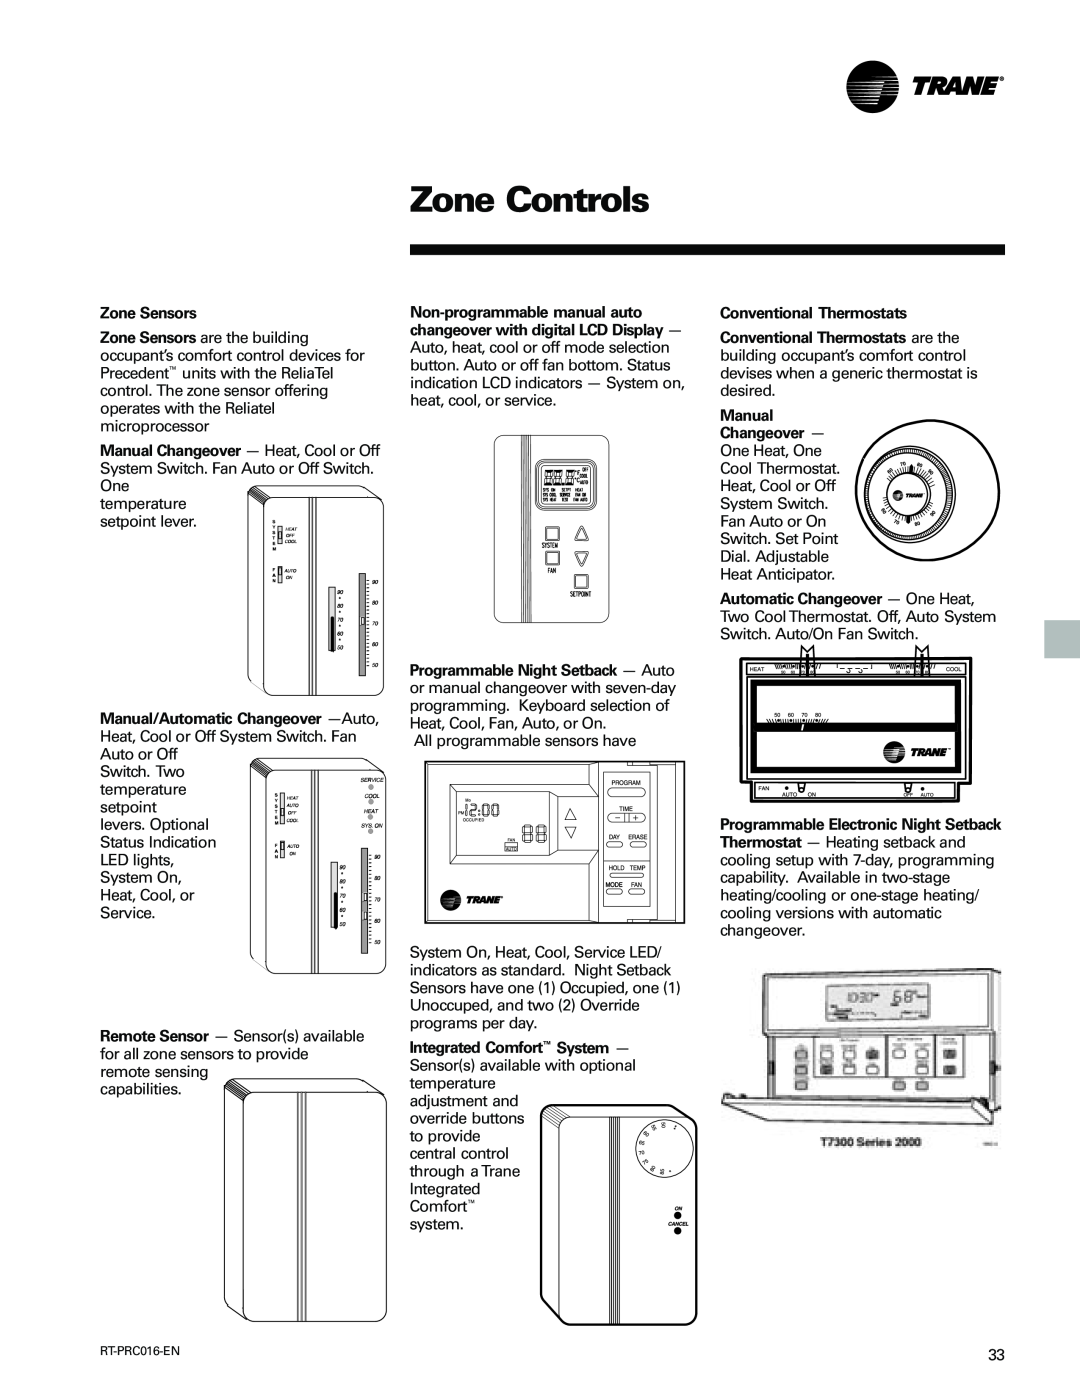 Trane TSC060-120 manual Zone Controls 